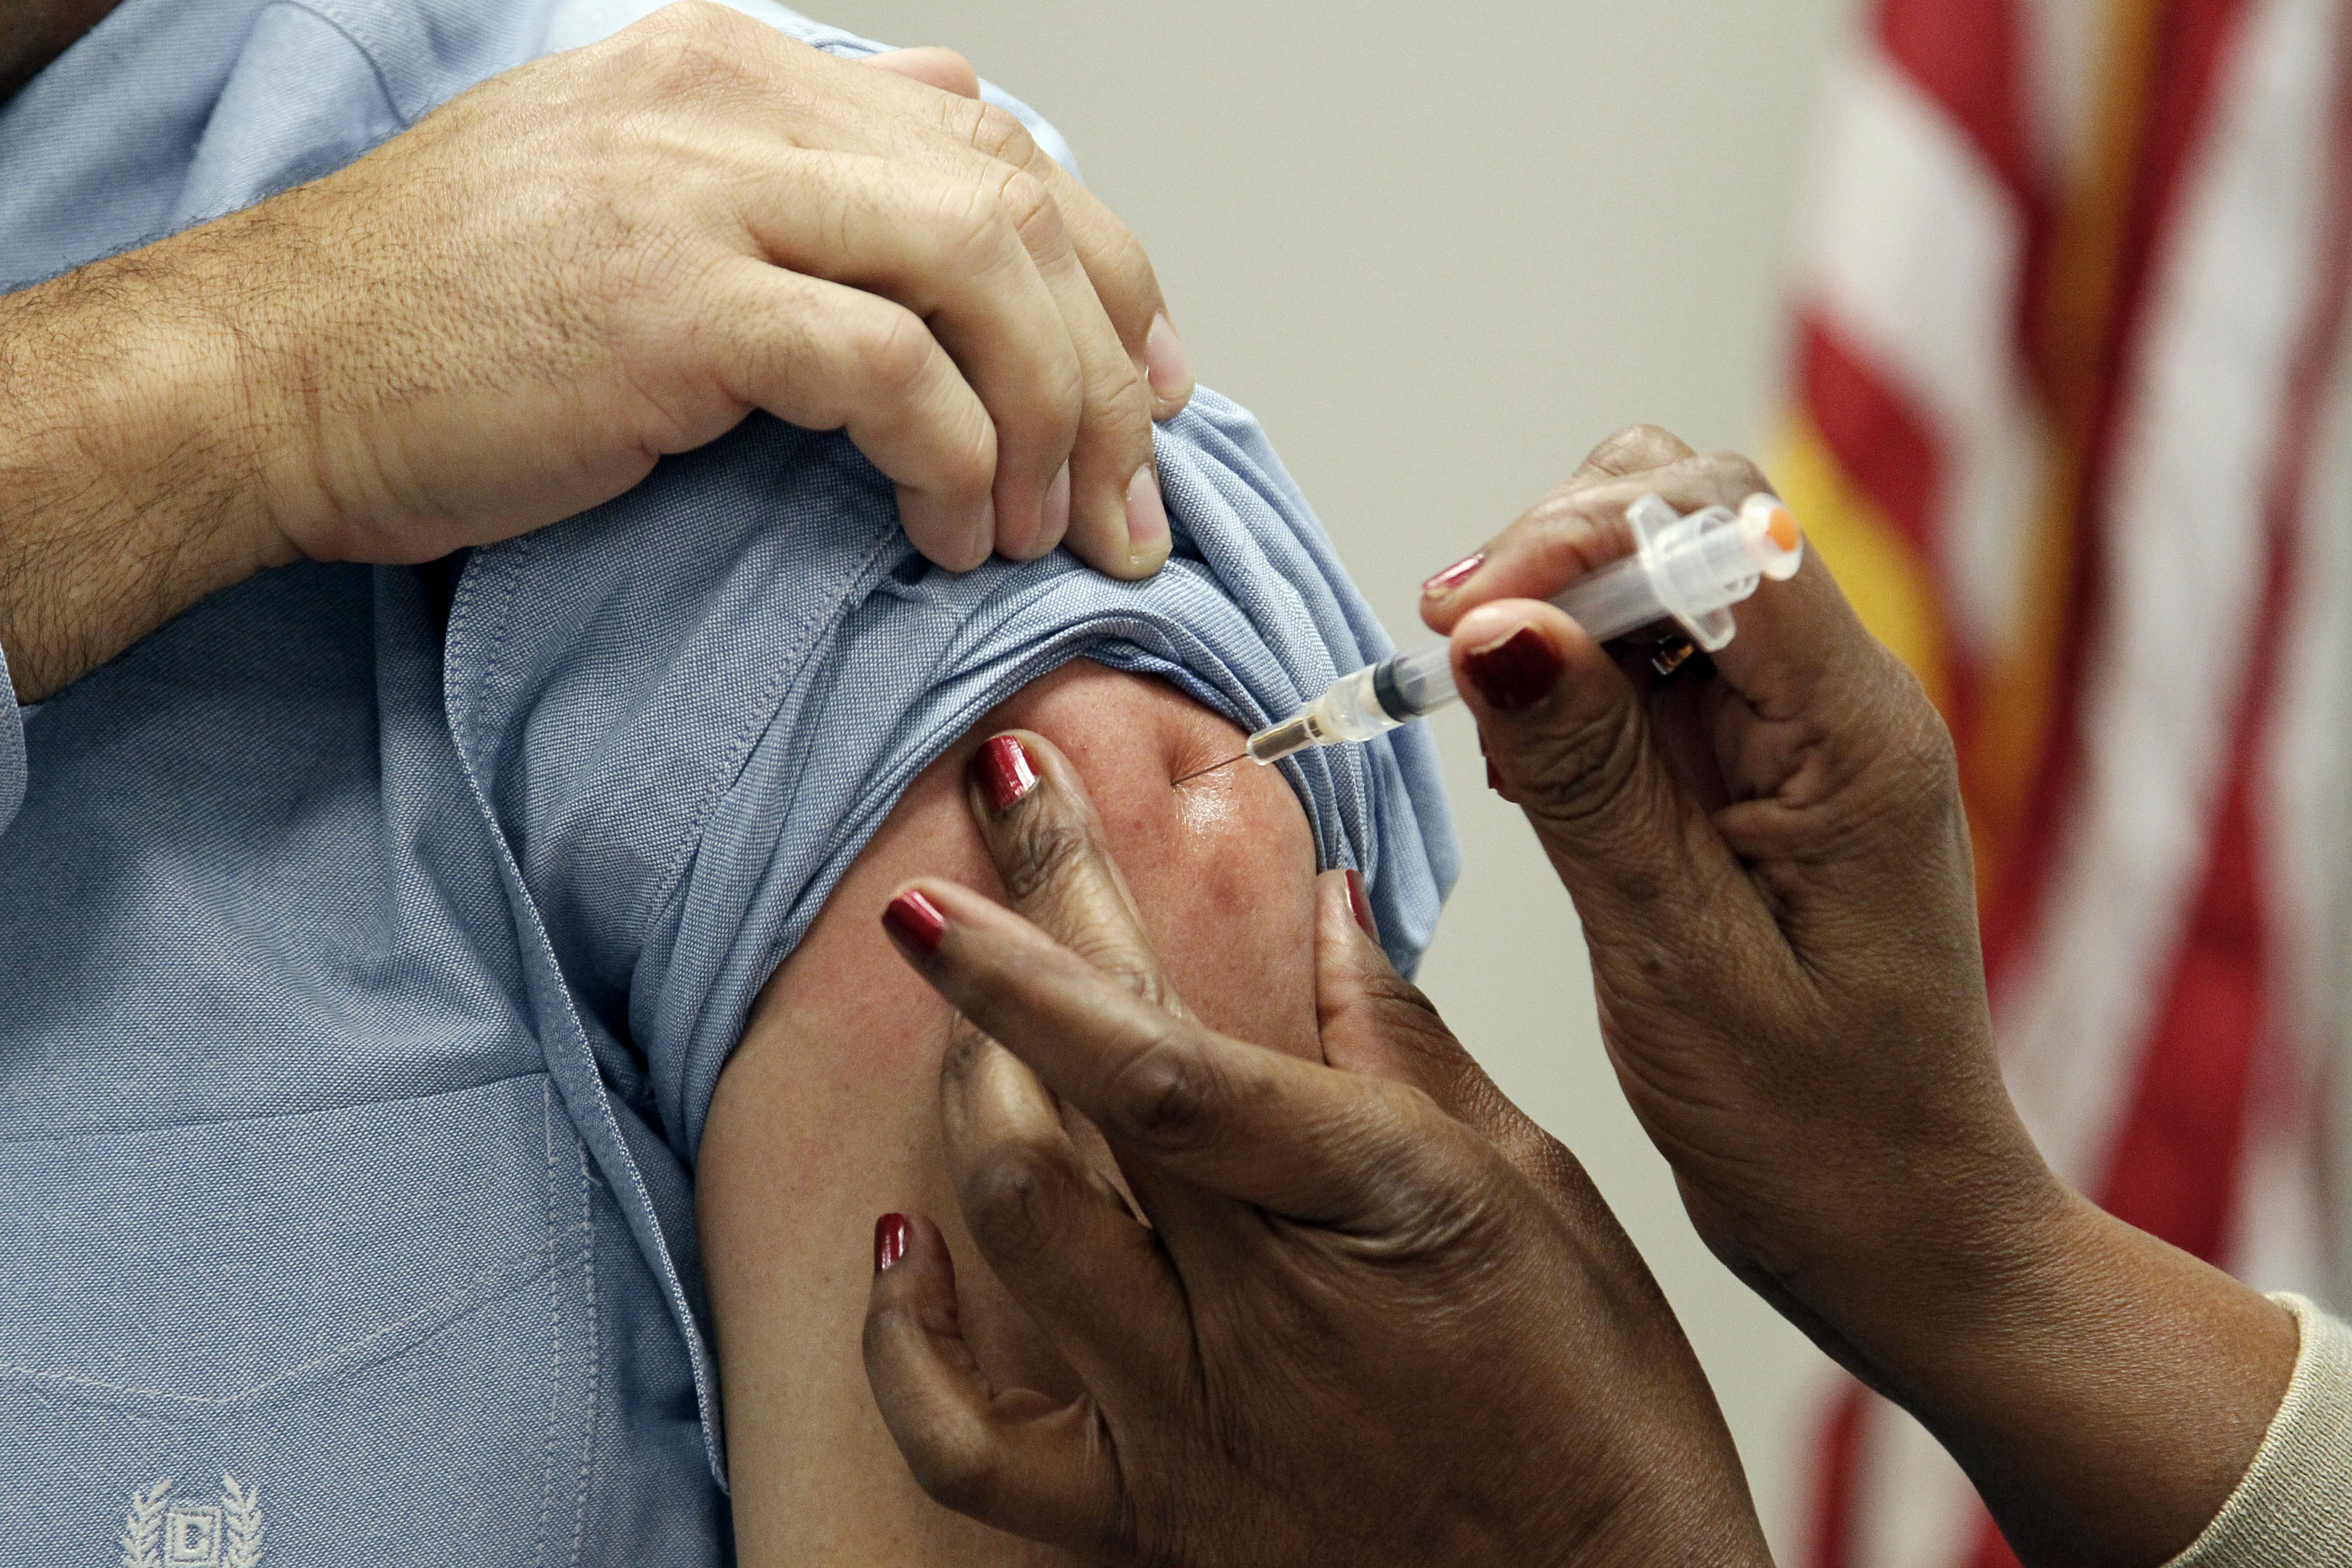 Doctors urge flu shot ahead of what could be rough season